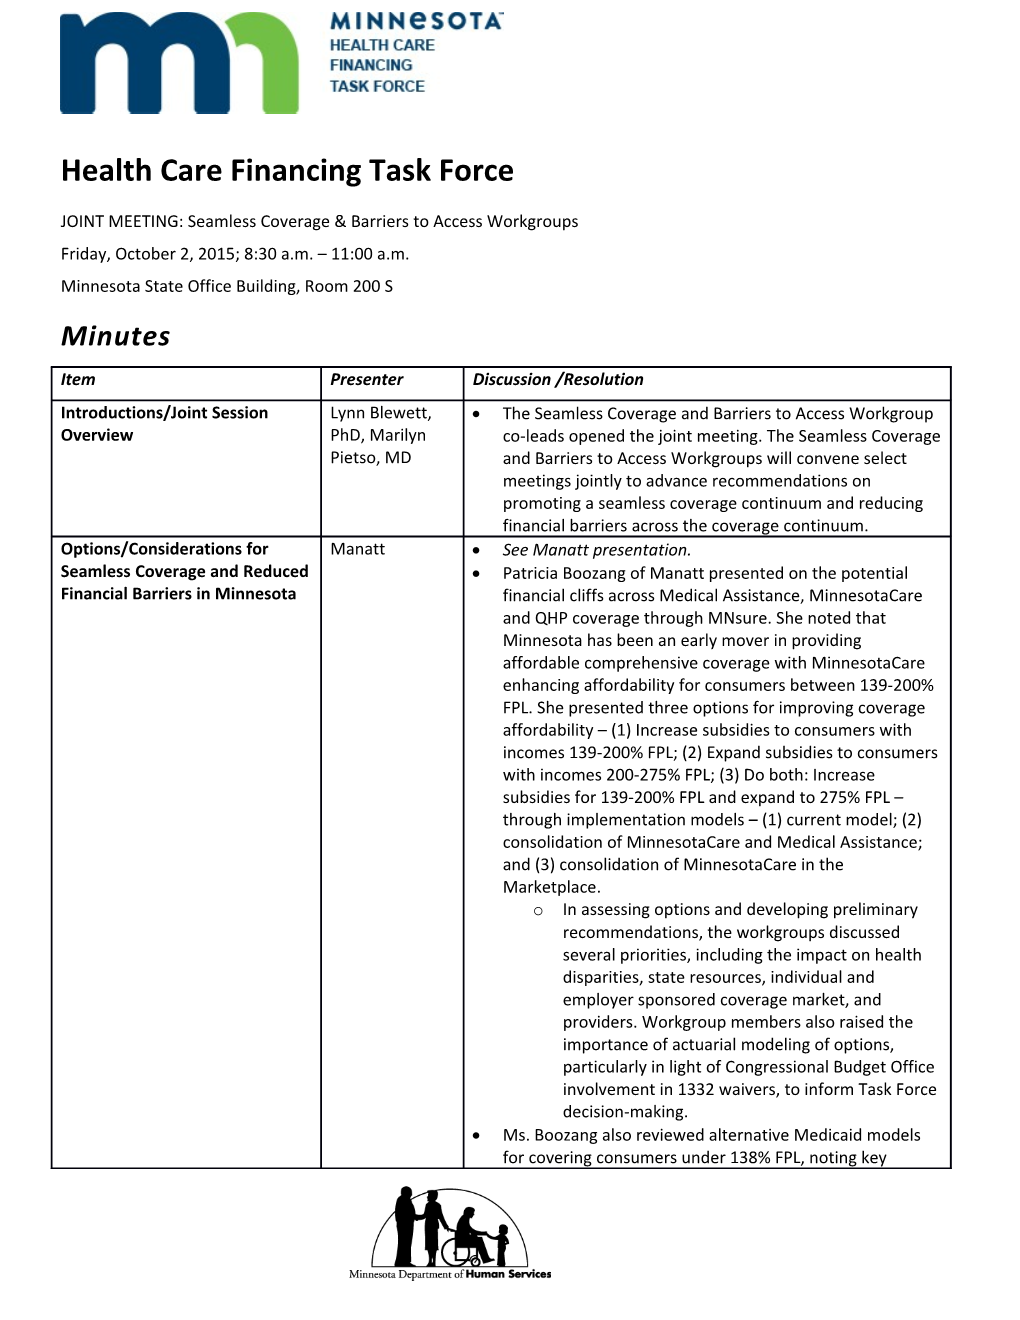 2015 Health Care Financing Task Force Members